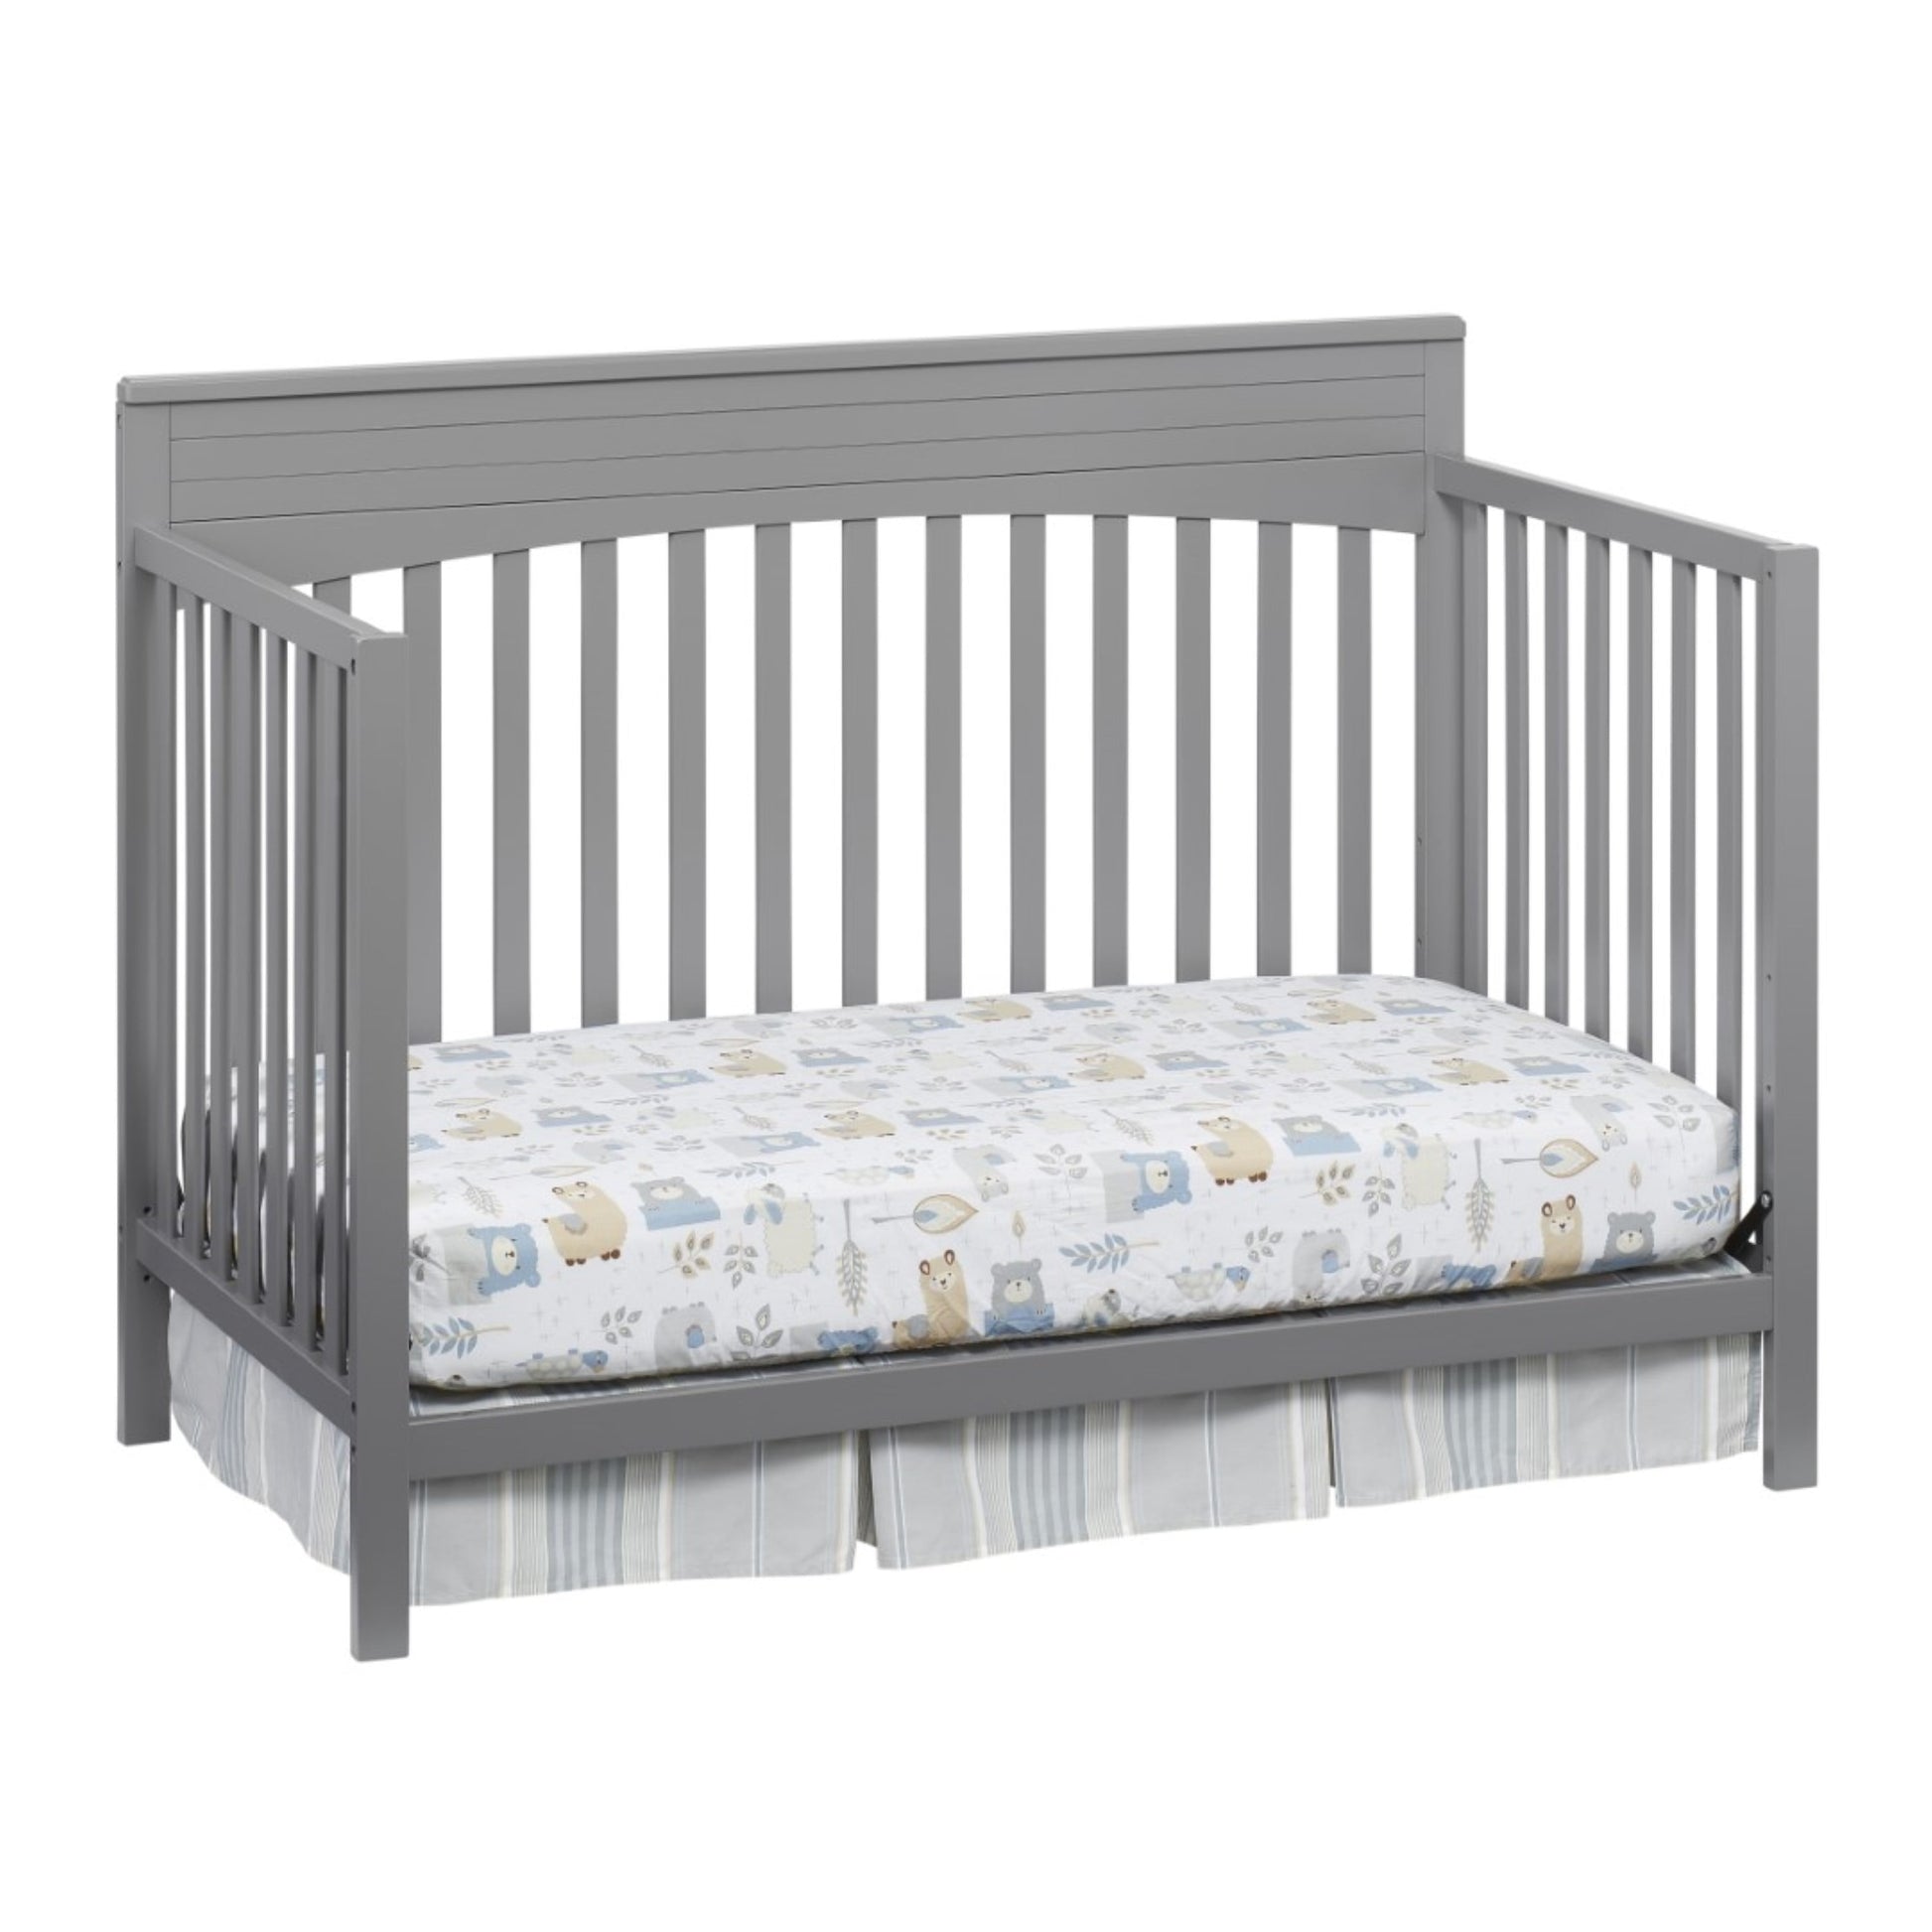 Harper 4-In-1 Convertible Crib, Dove Gray, GREENGUARD Gold Certified, Wooden Crib